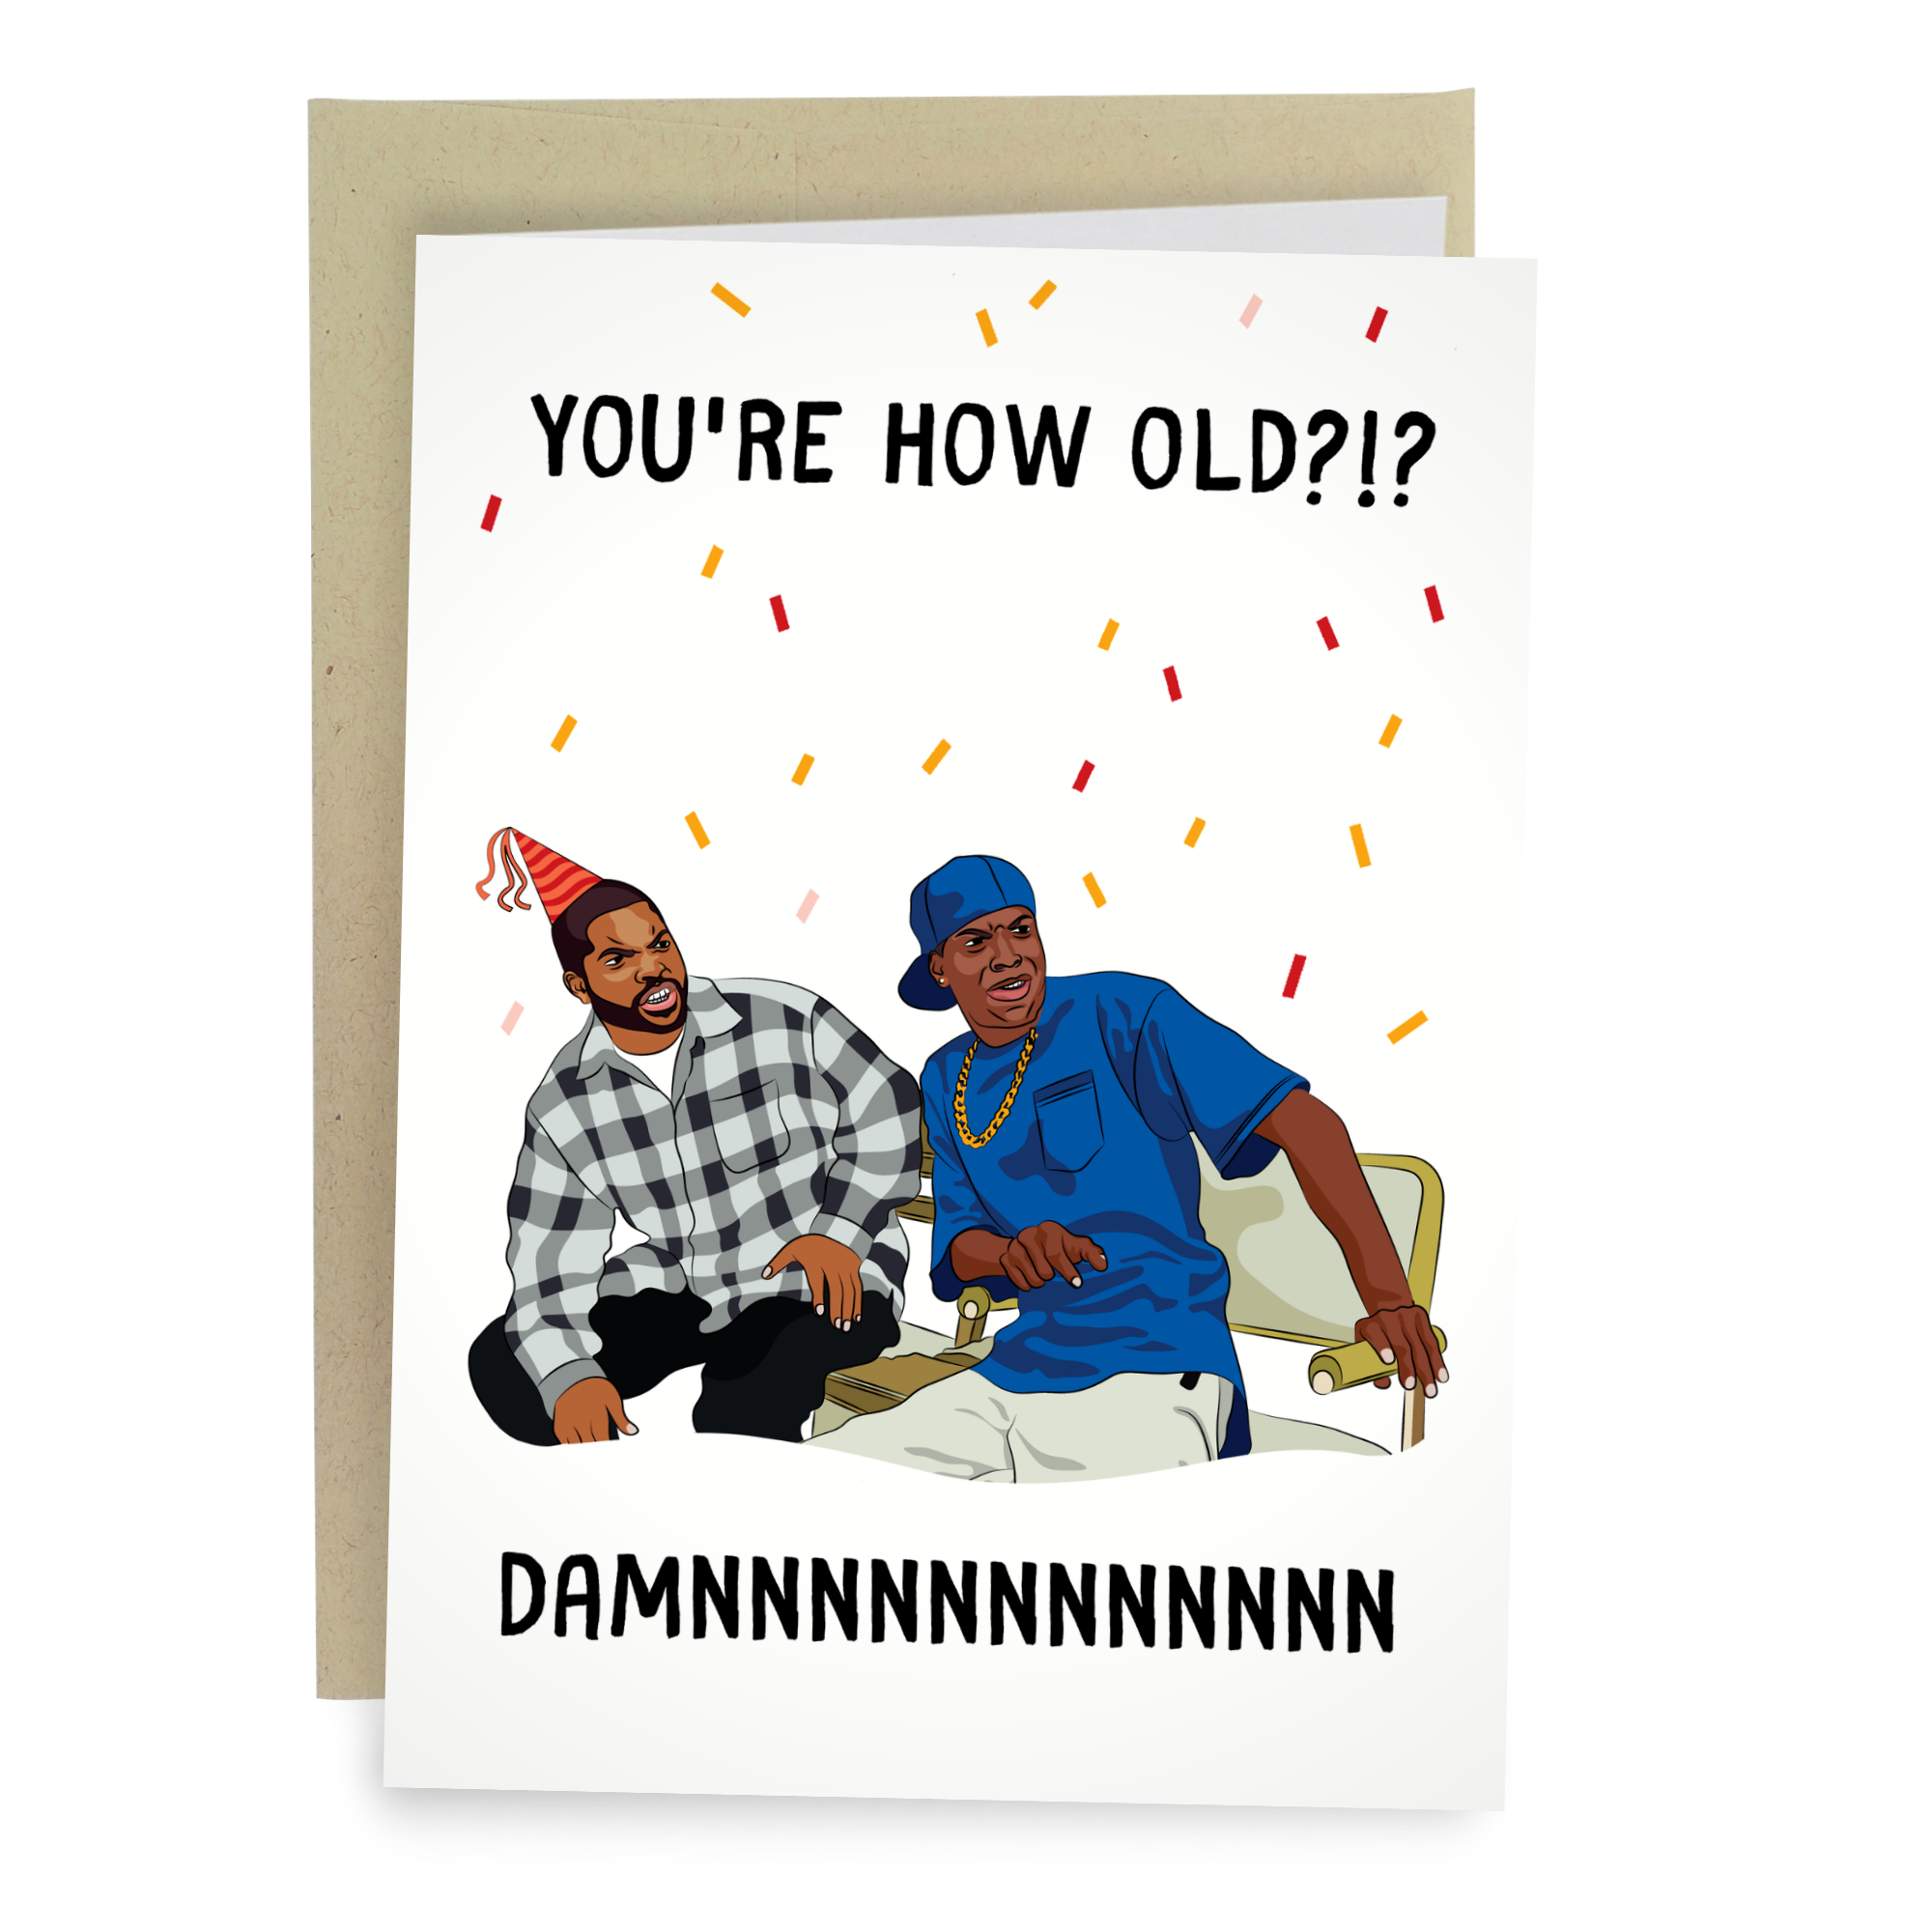 rude birthday cards for men